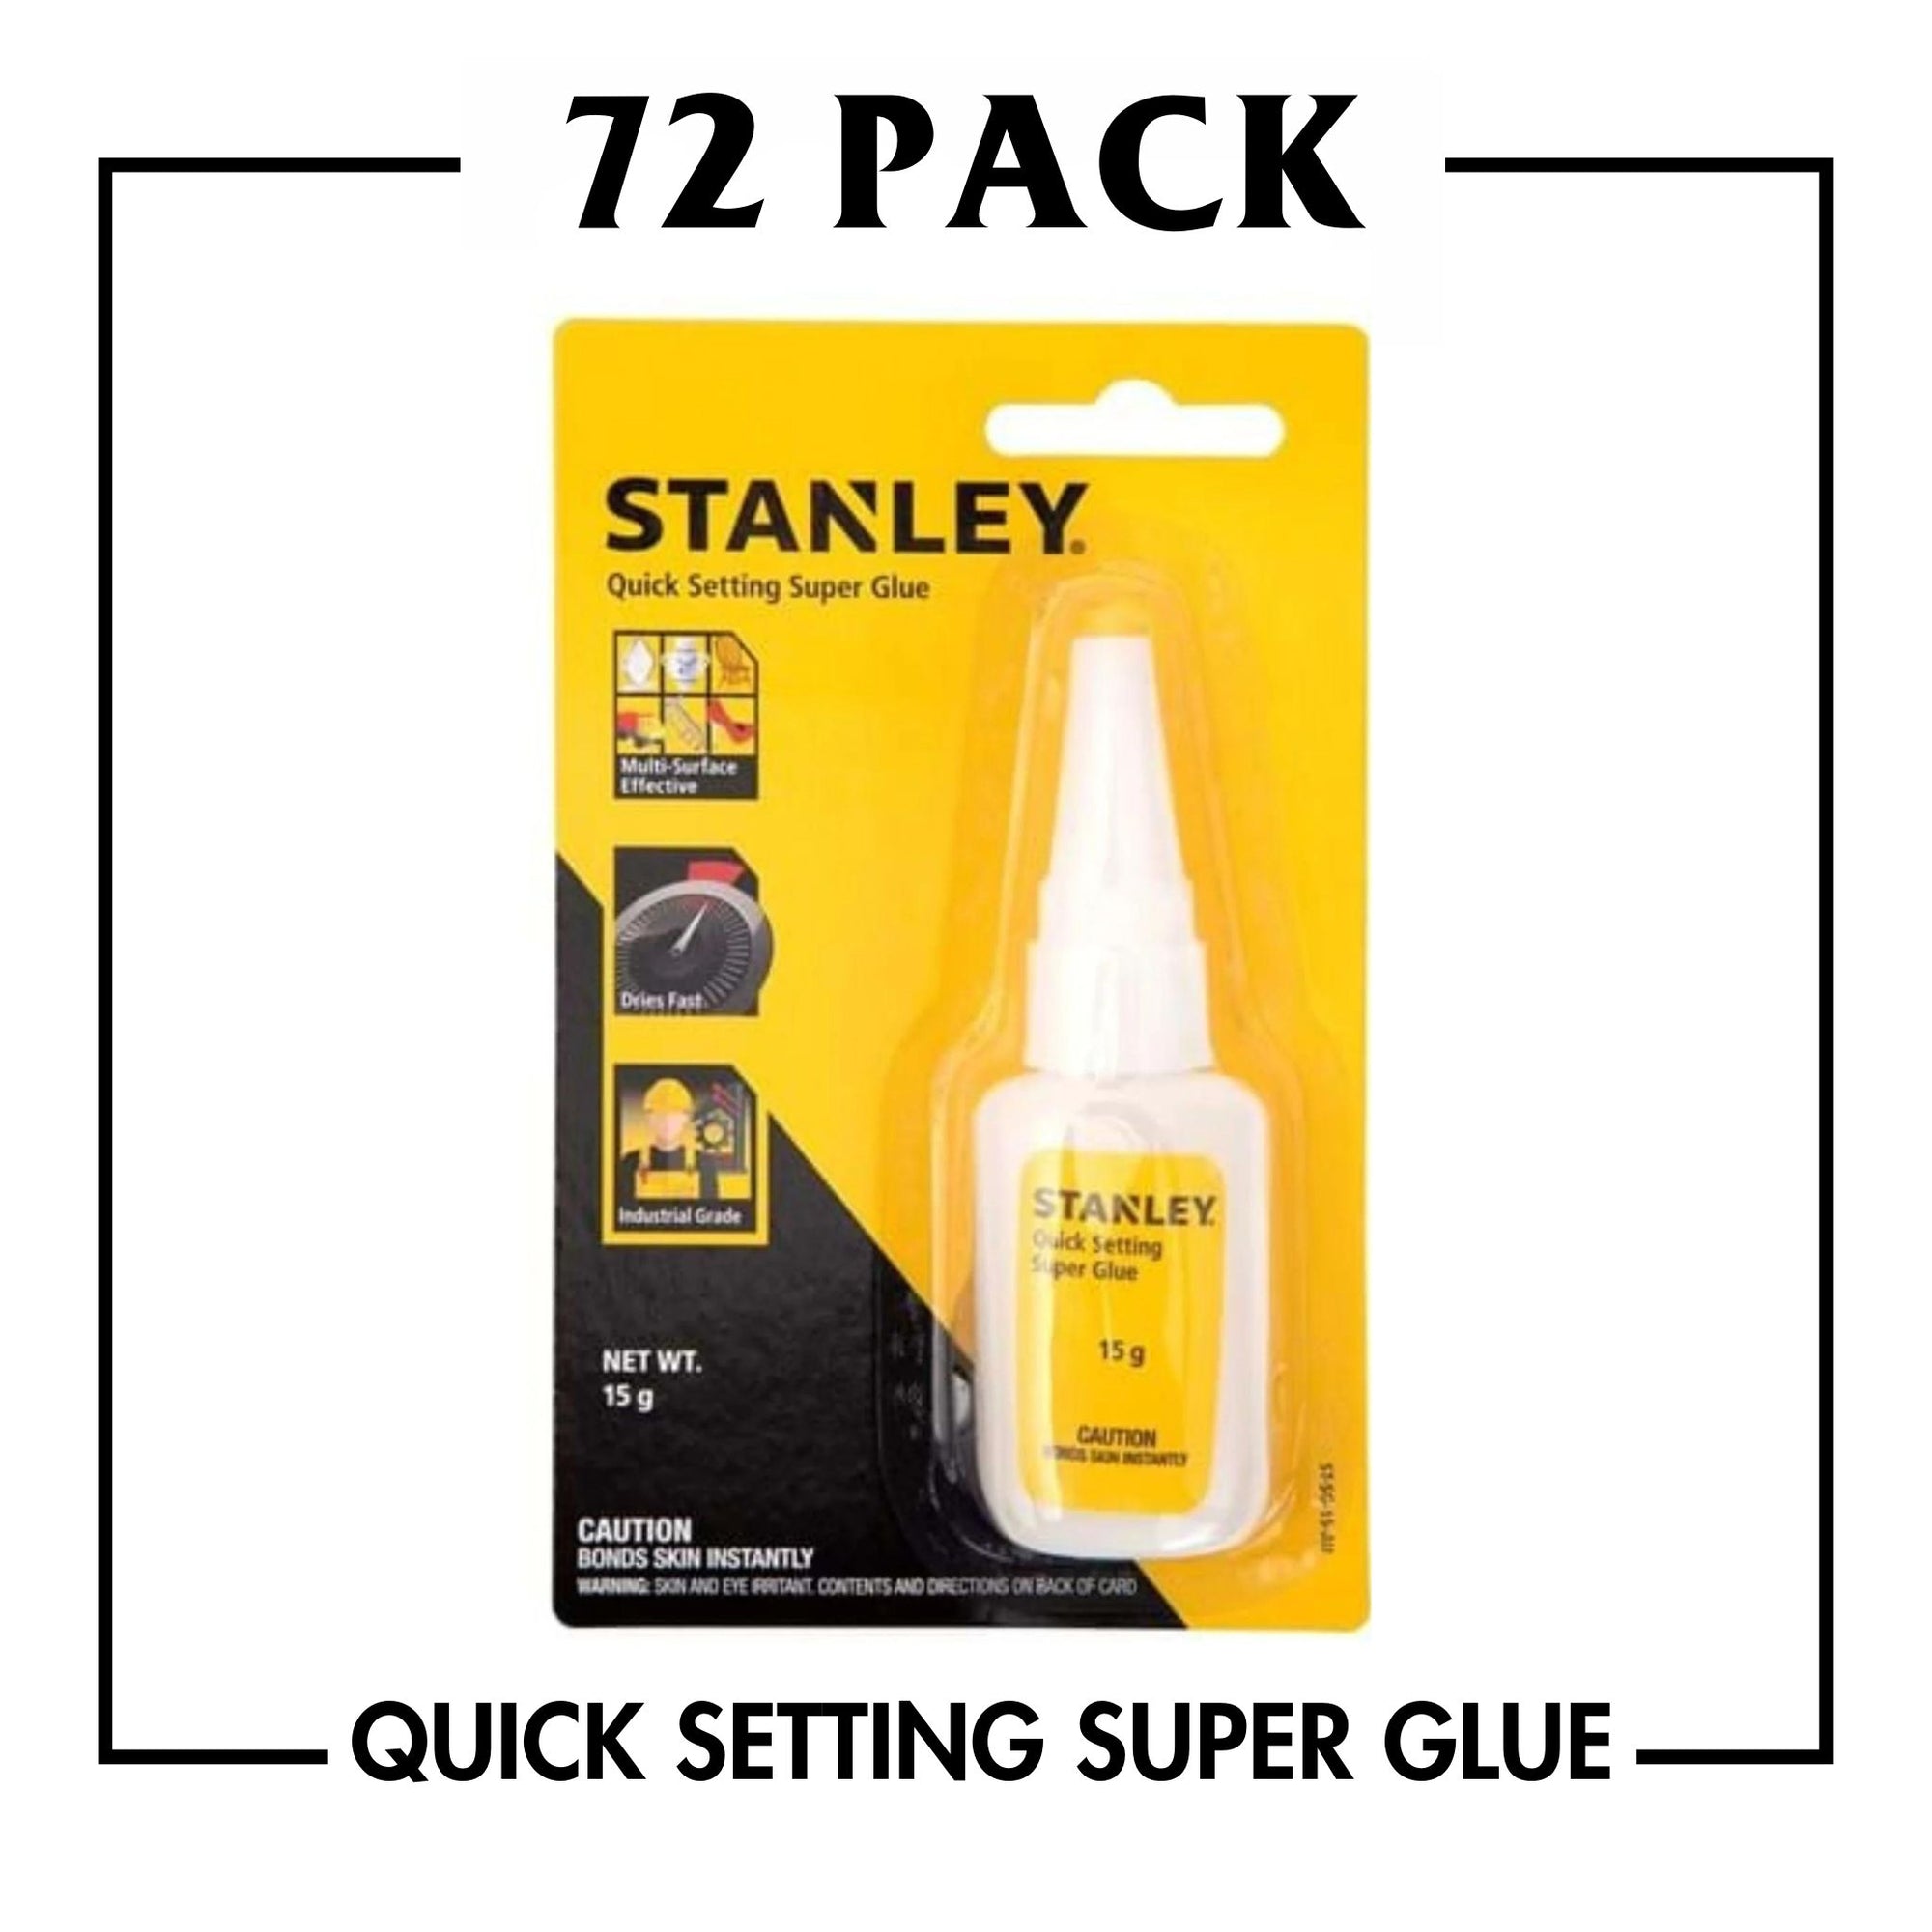 72 Pack | Stanley Quick Setting Super Glue Bottle (ST-SG-15-AU) - South East Clearance Centre